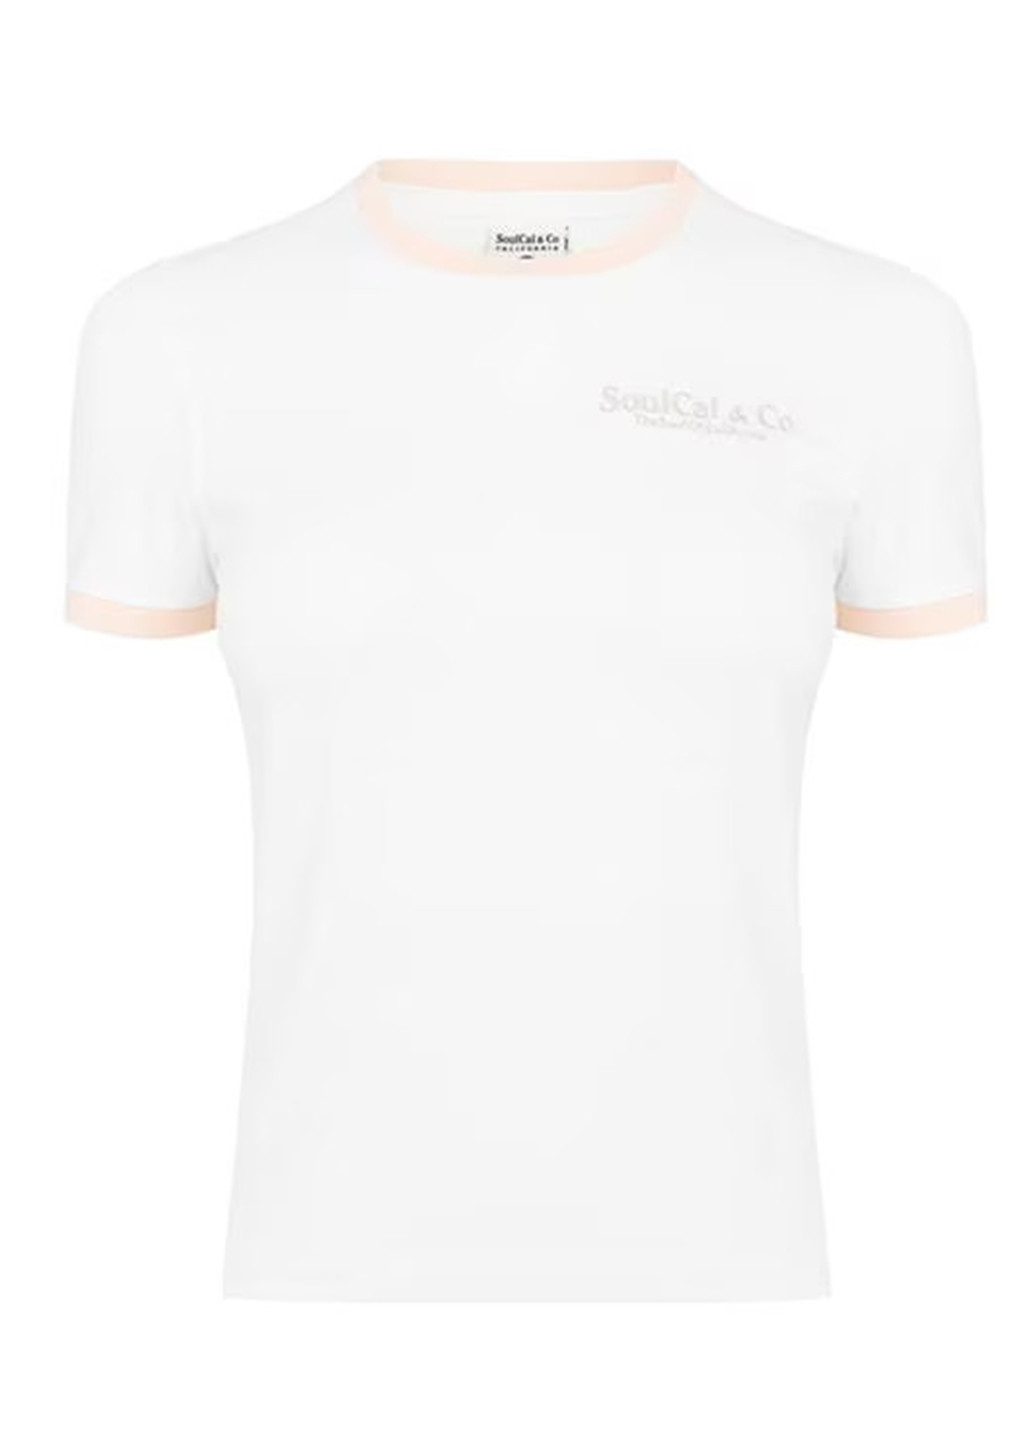 Біла літня футболка Soulcal & Co